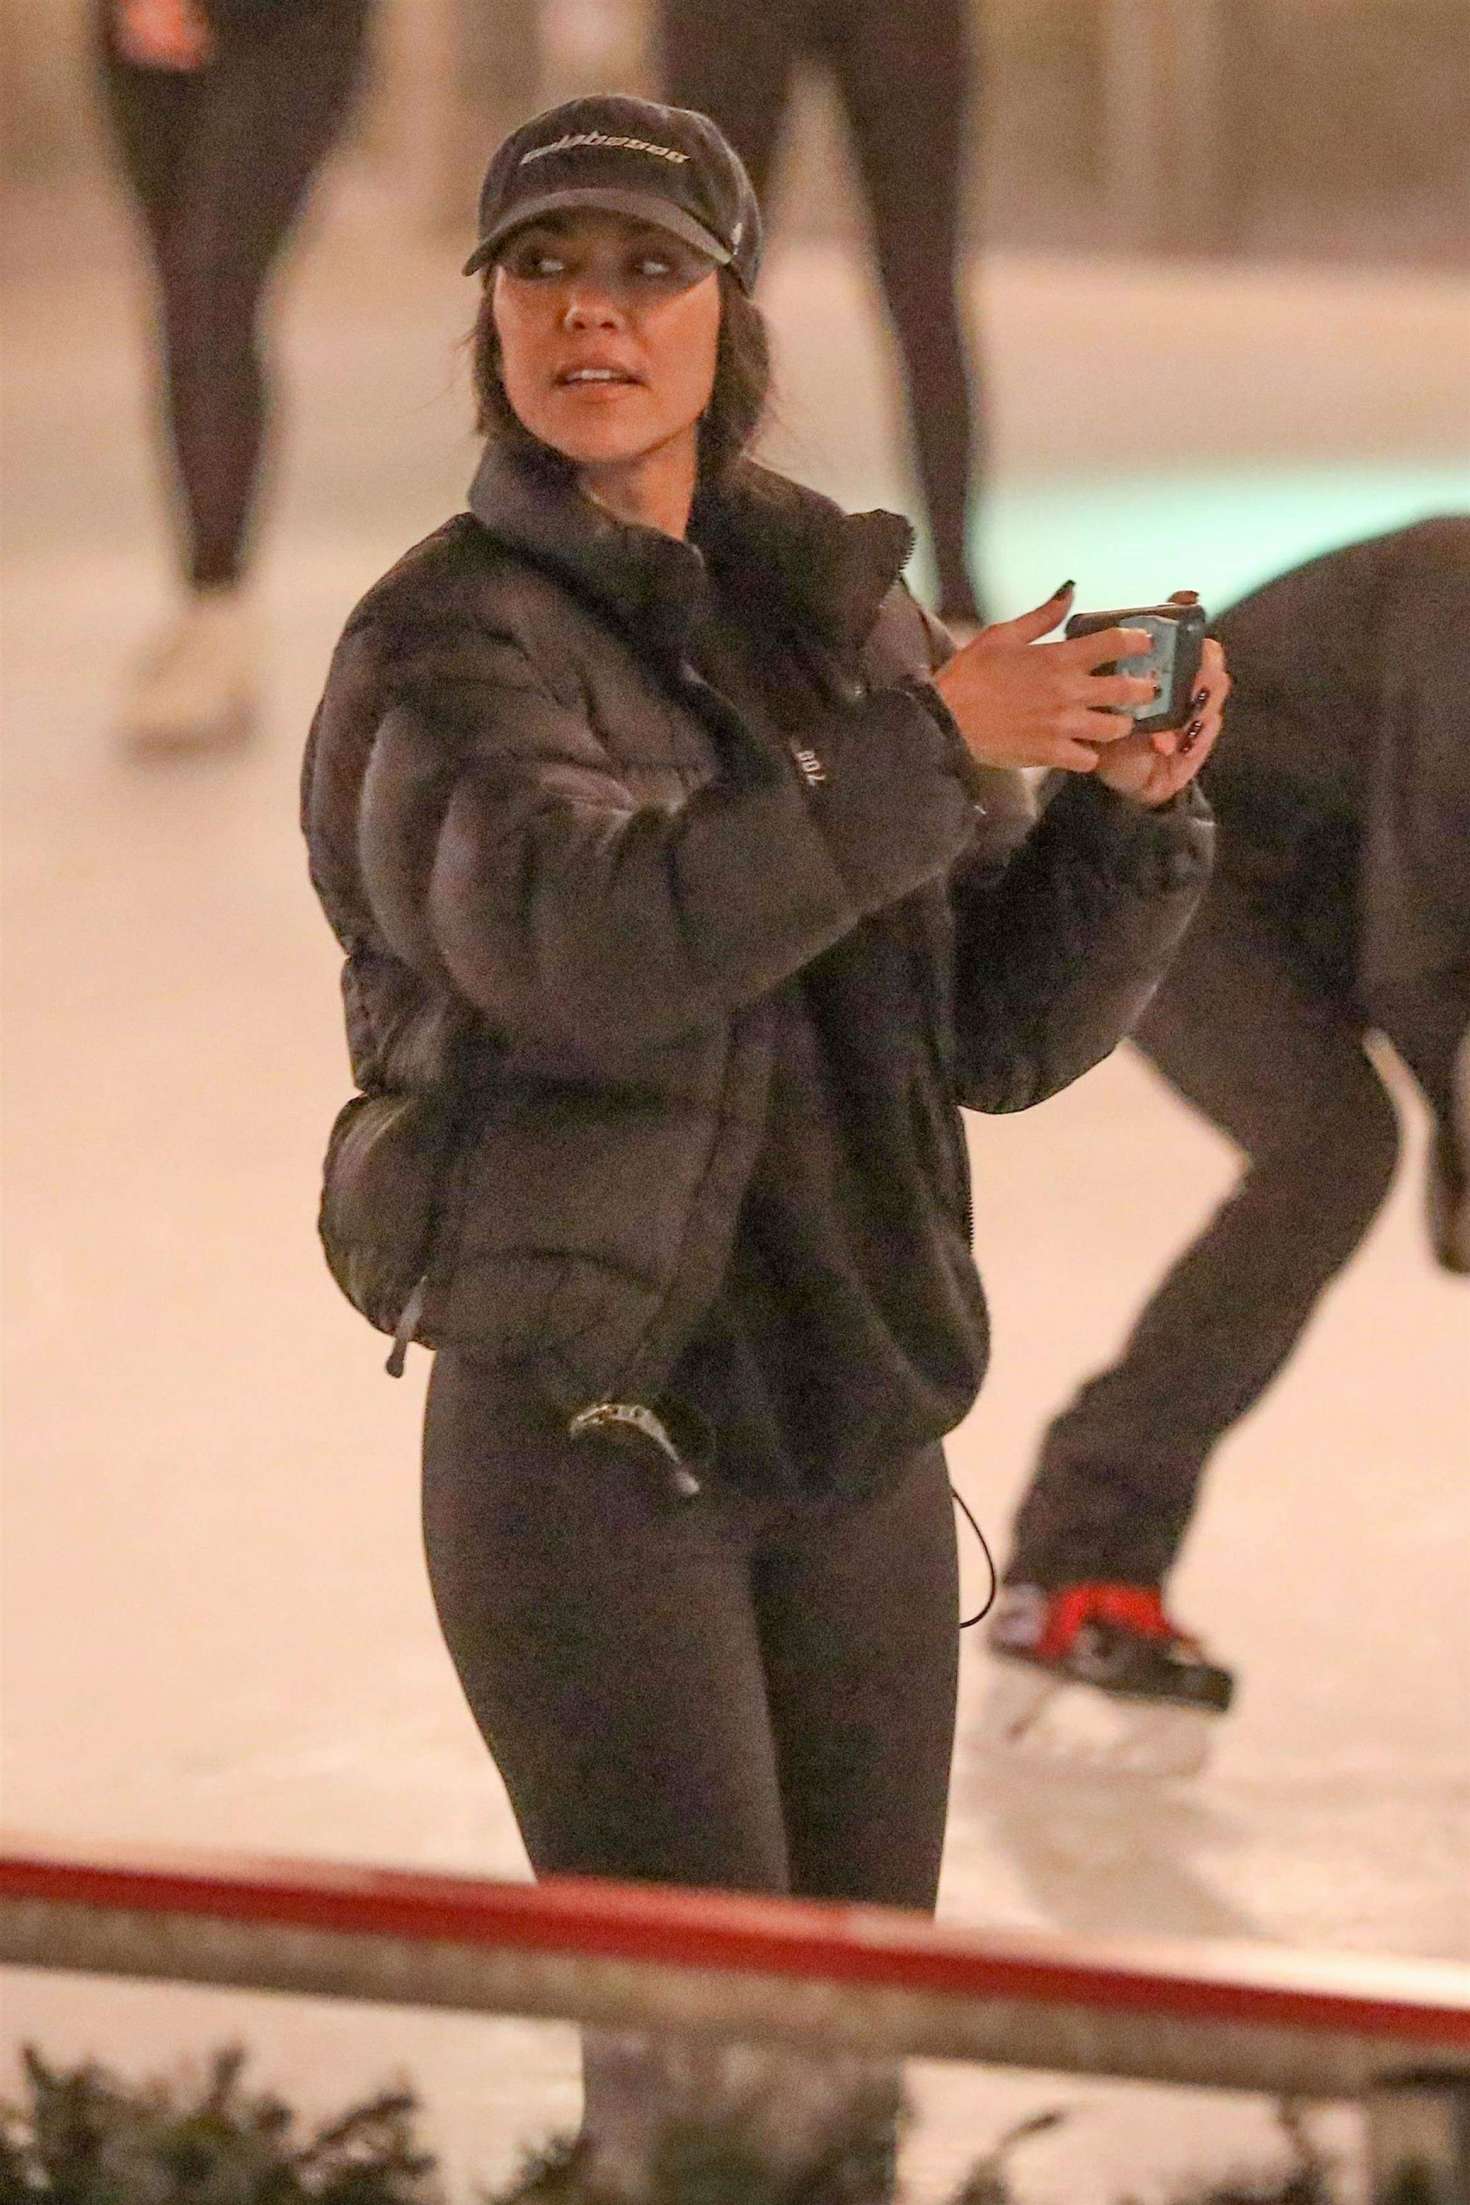 Kourtney Kardashian and Larsa Pippen â€“ Ice skating in Los Angeles